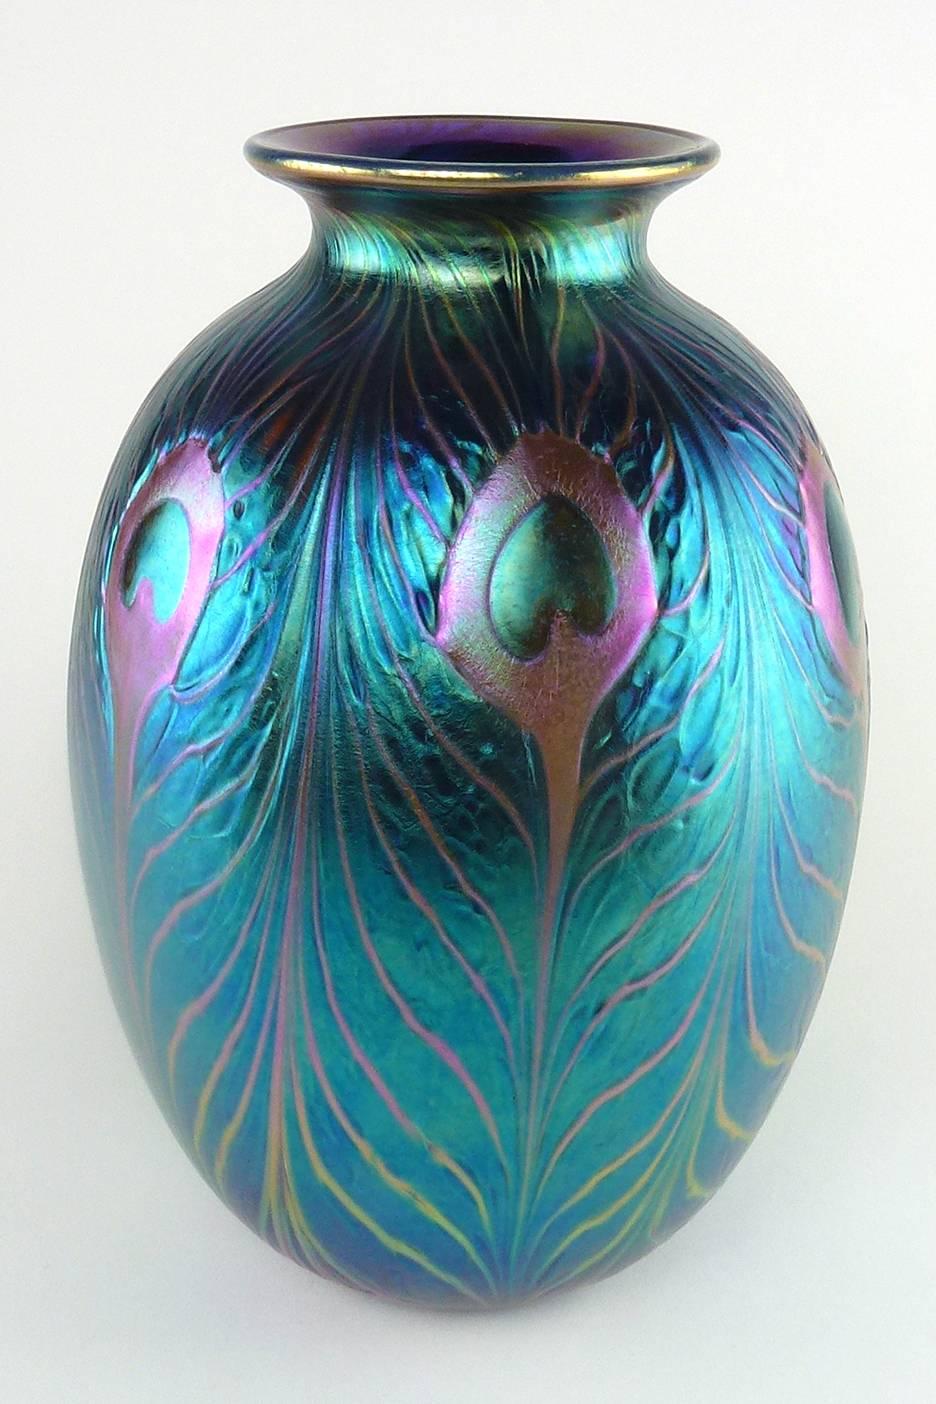 Charles Lotton iridescent blue peacock feather studio art glass vase, folded over rim, iridescent interior, studio polished base and pontil mark.

Signed 